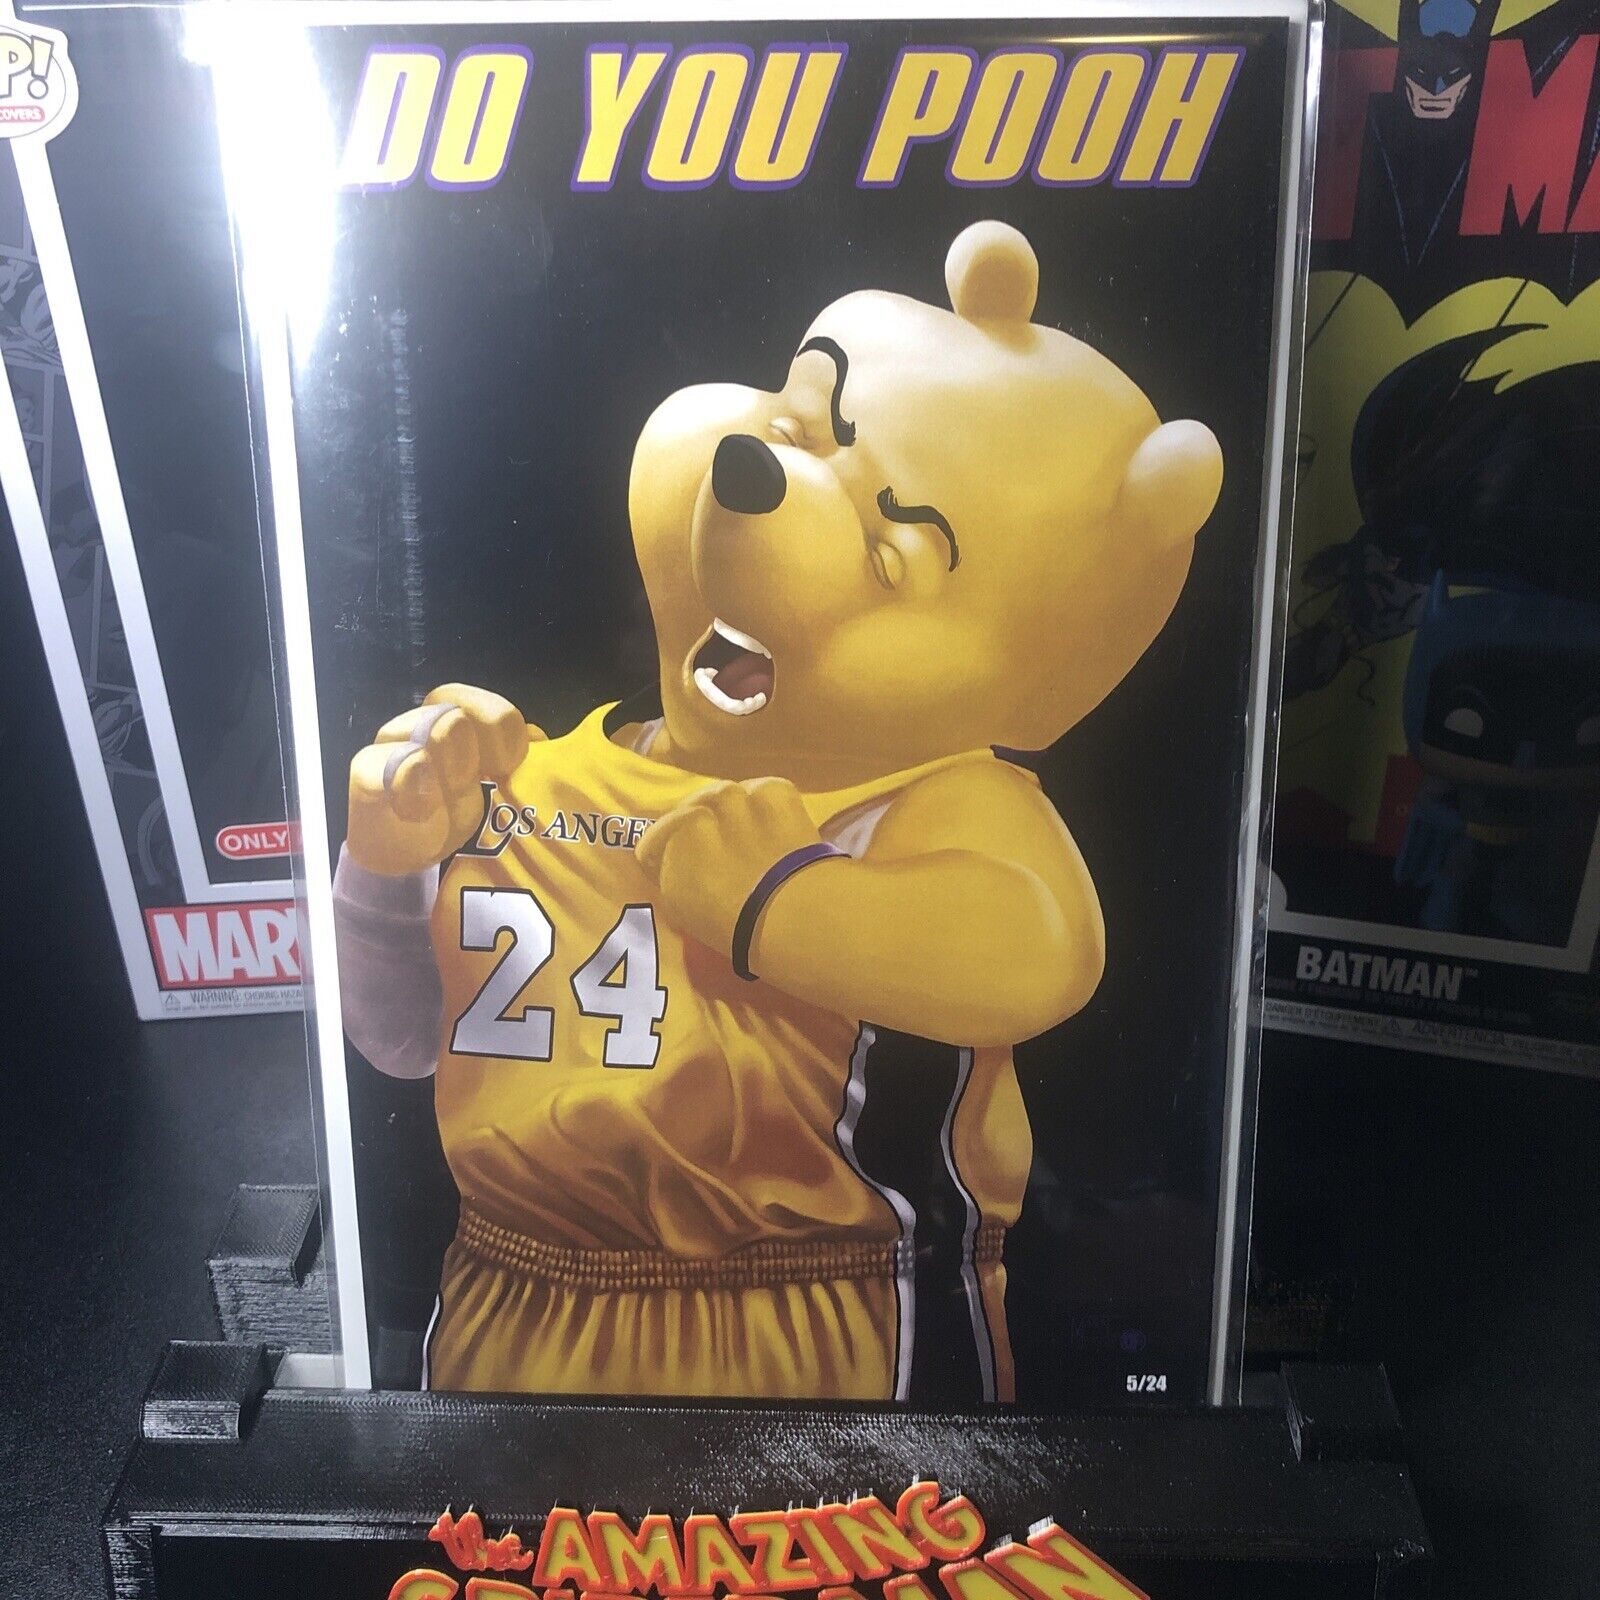 Do You Pooh - Kobe Bryant Homage - LACC Trade Dress 5/24